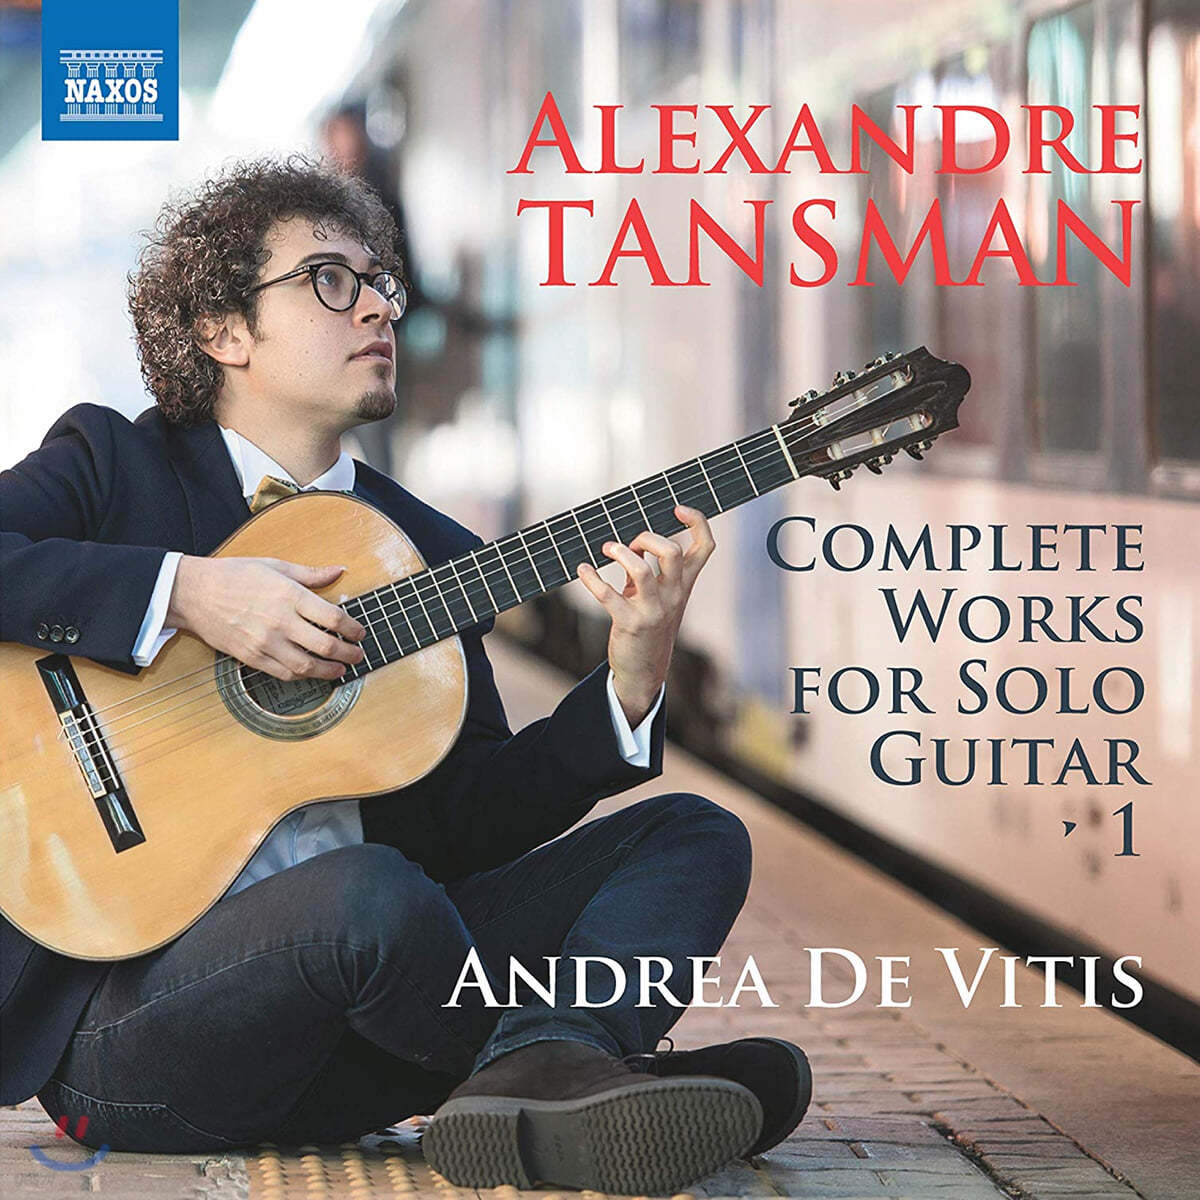 Andrea De Vitis 알렉산드르 탄스만: 기타 독주를 위한 음악 1권 (Alexandre Tansman: Complete Works for Solo Guitar, Vol. 1)